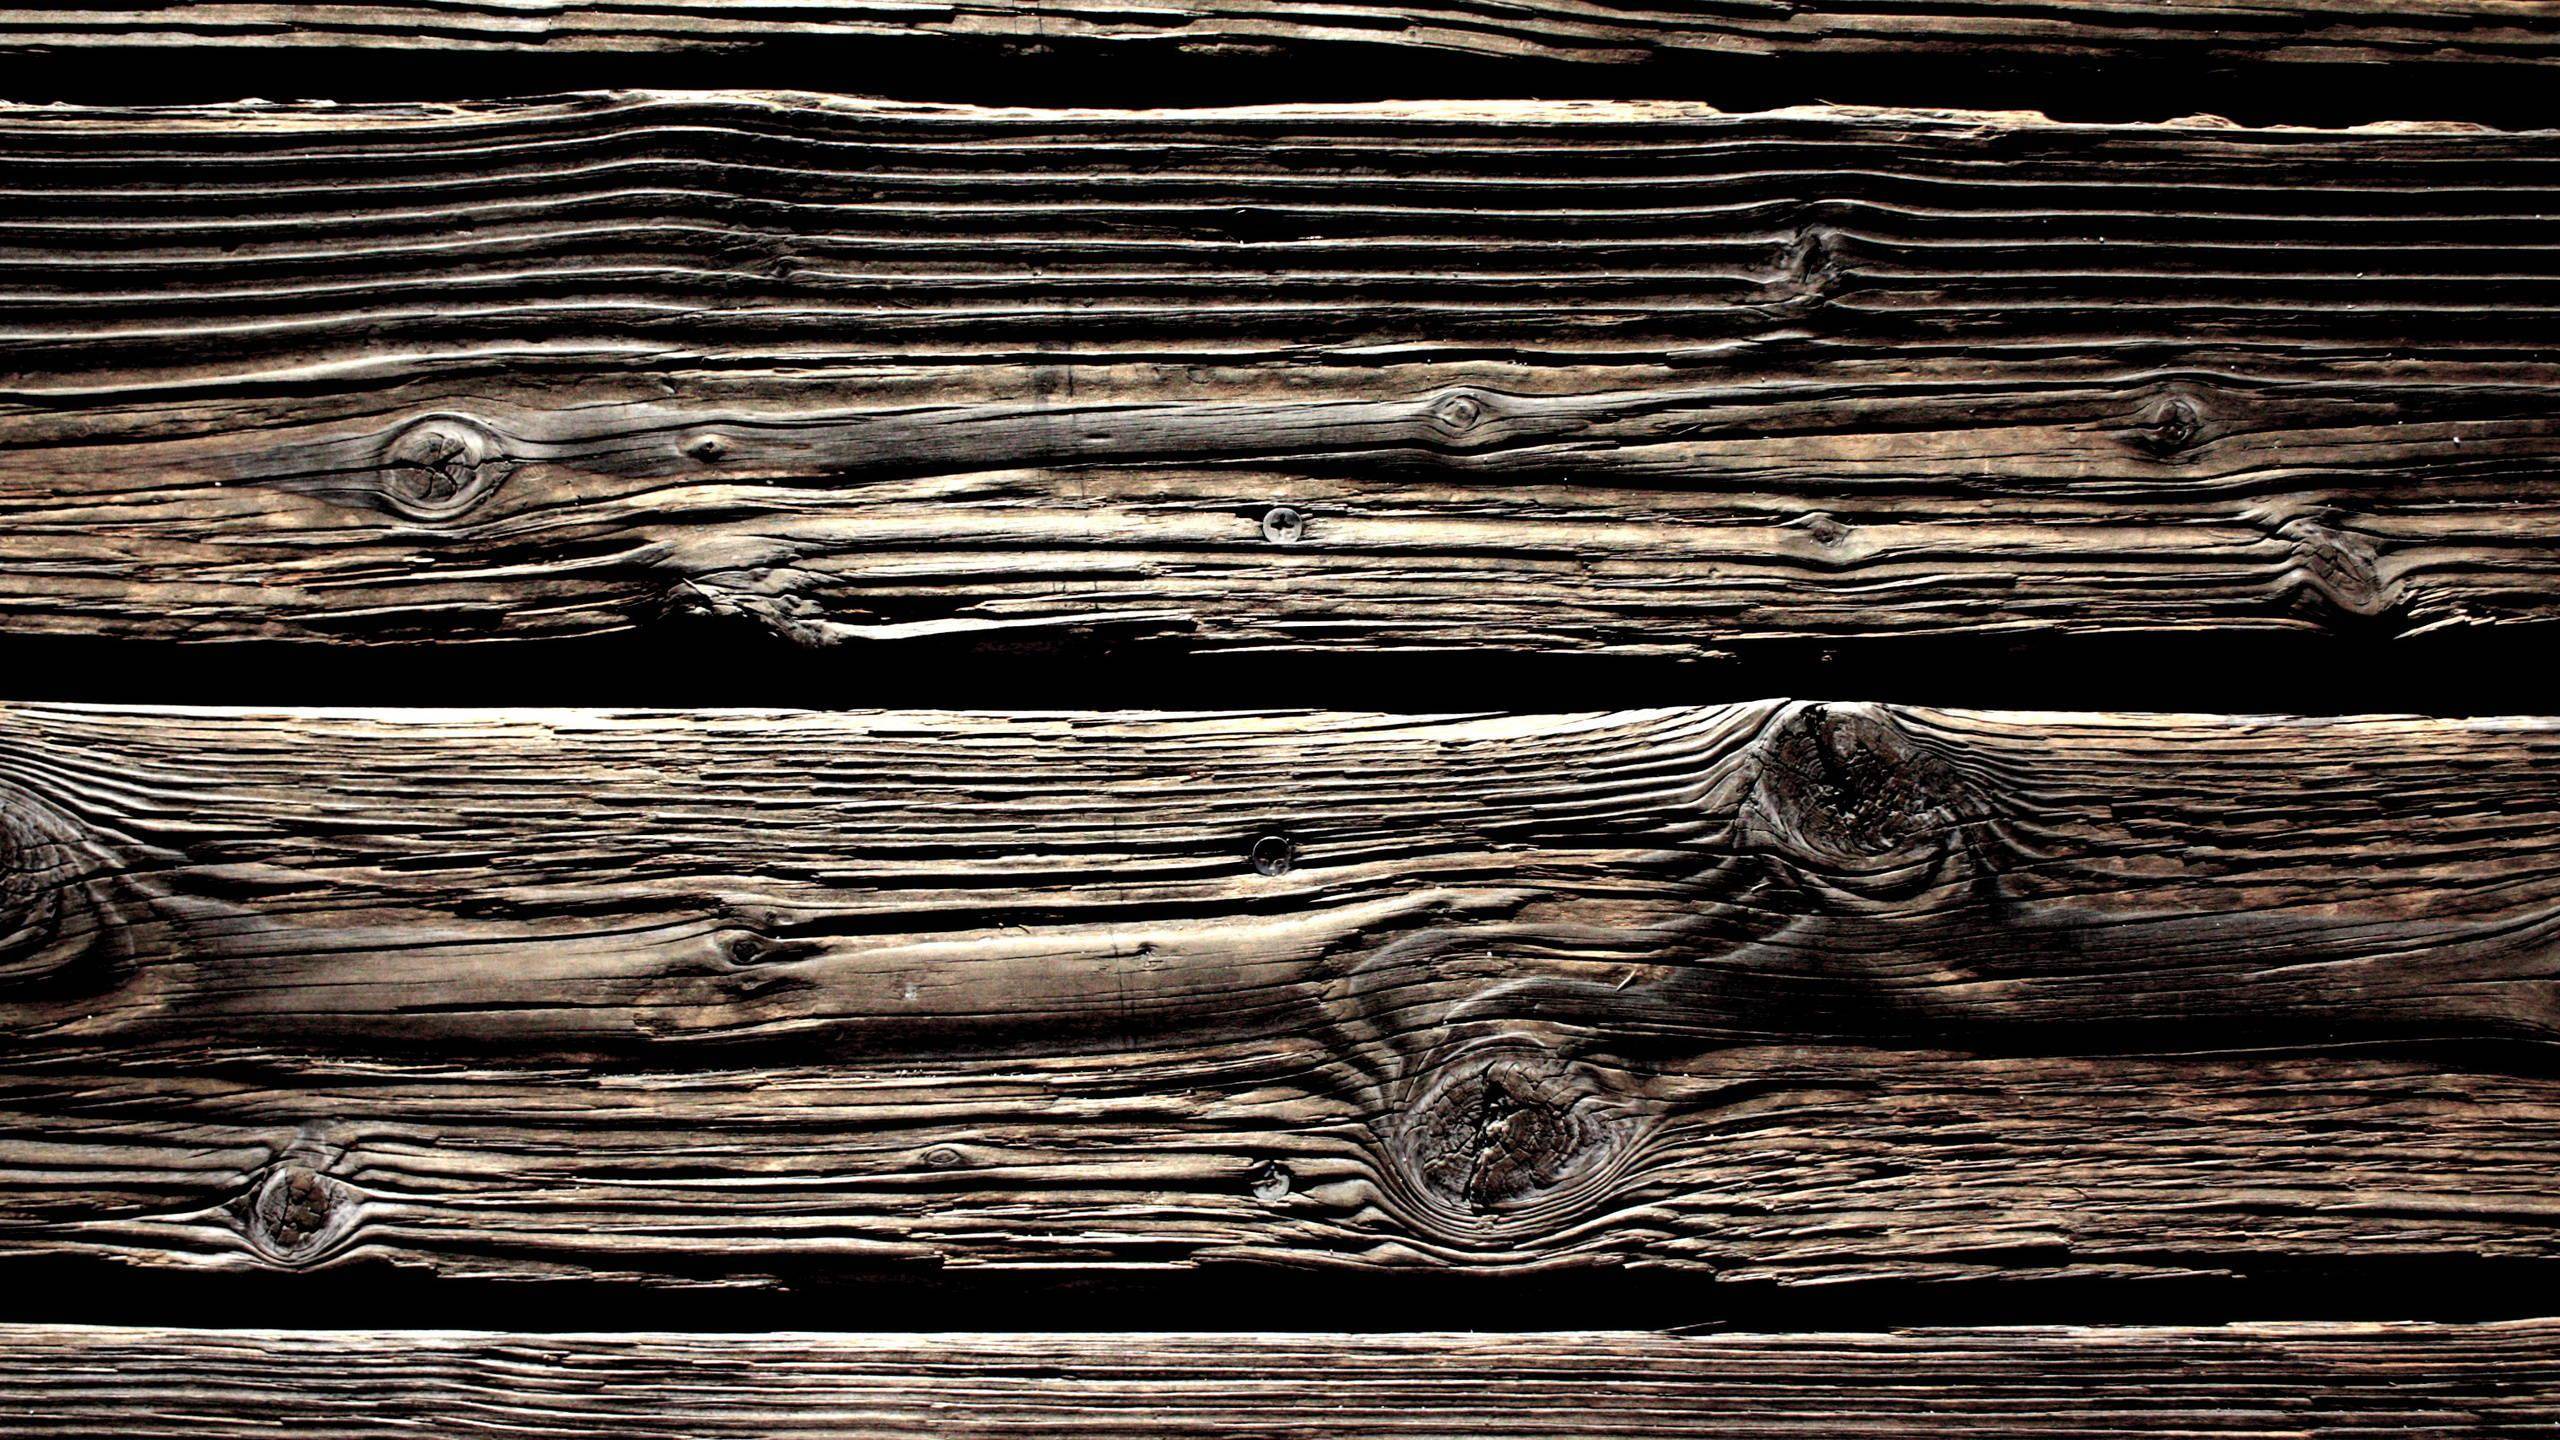 Hd Wood Backgrounds 014 Peerless Distilling Co Afalchi Free images wallpape [afalchi.blogspot.com]